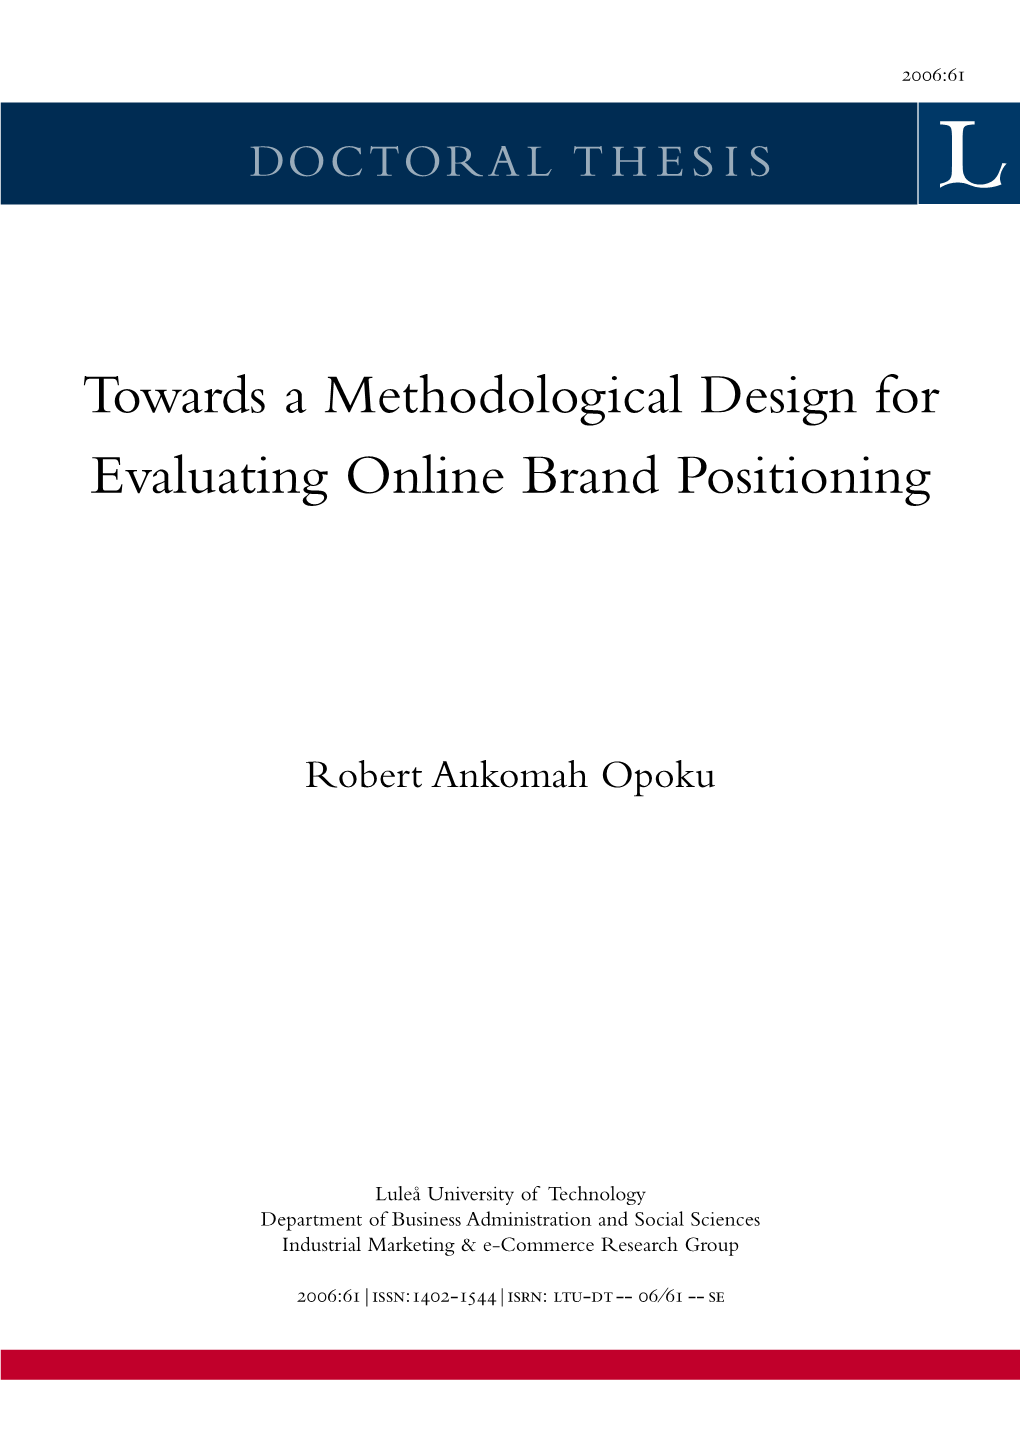 Towards a Methodological Design for Evaluating Online Brand Positioning